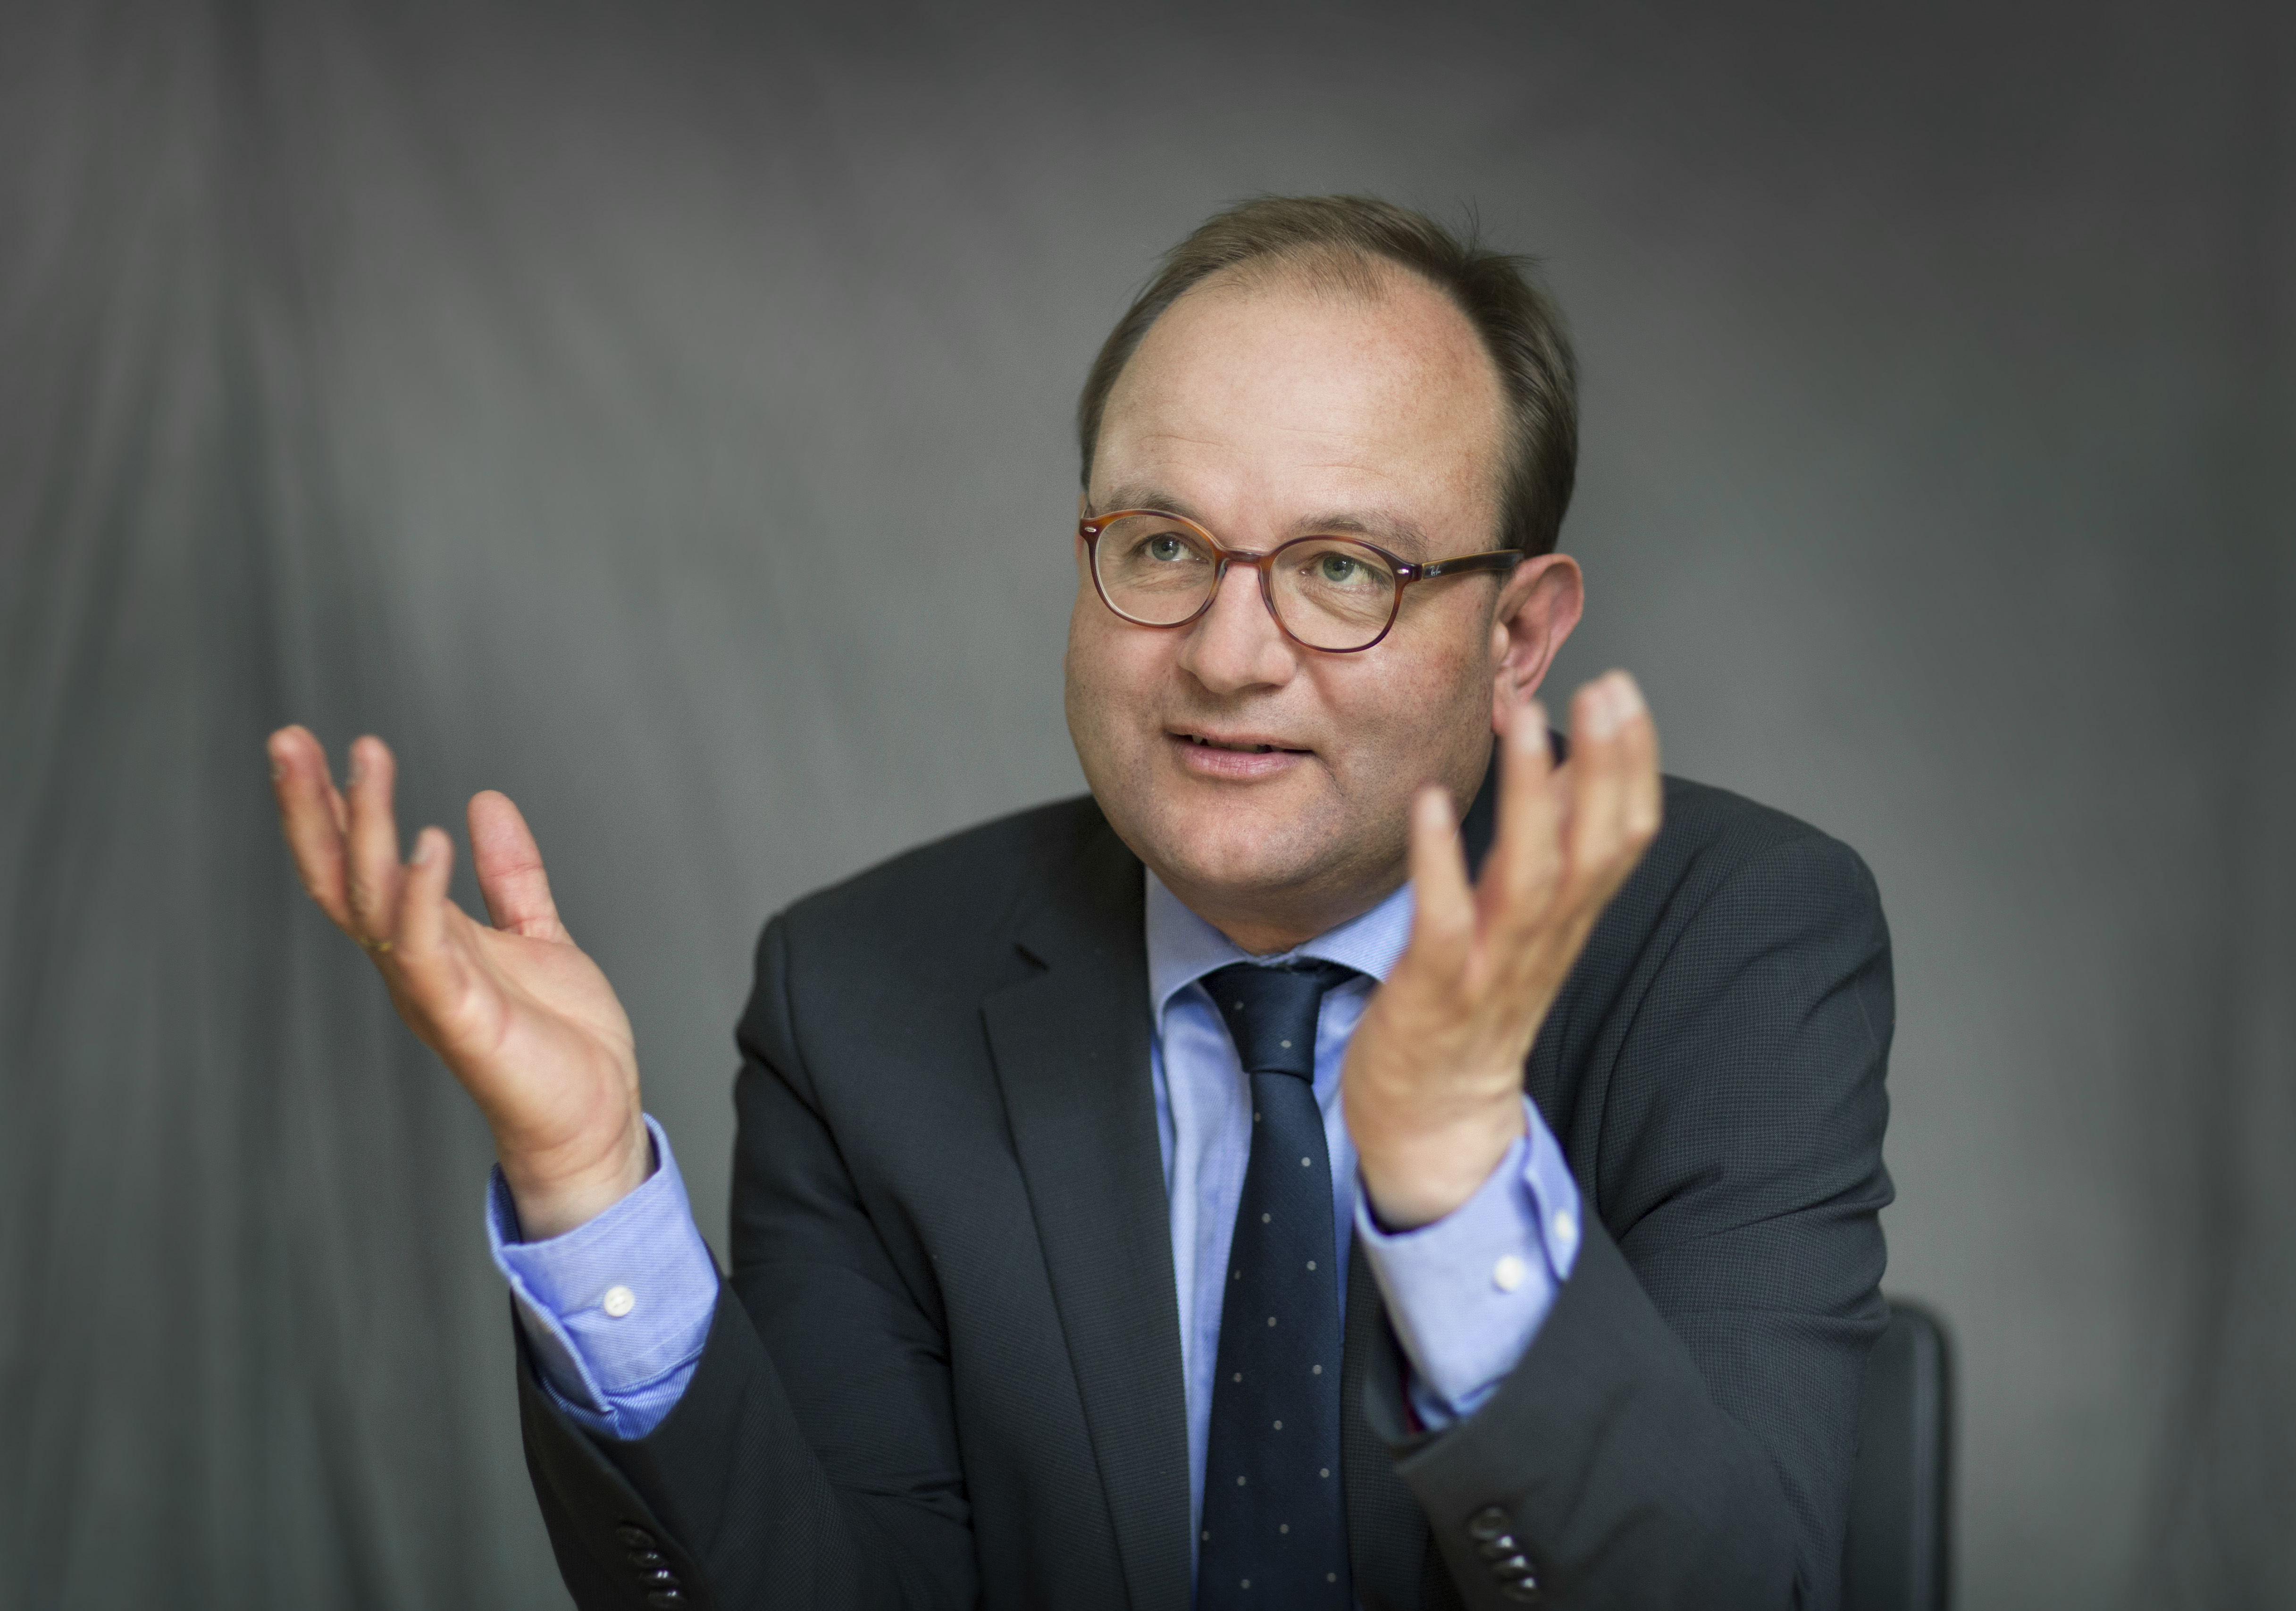 Ottmar Edenhofer among Germany's most influential economists